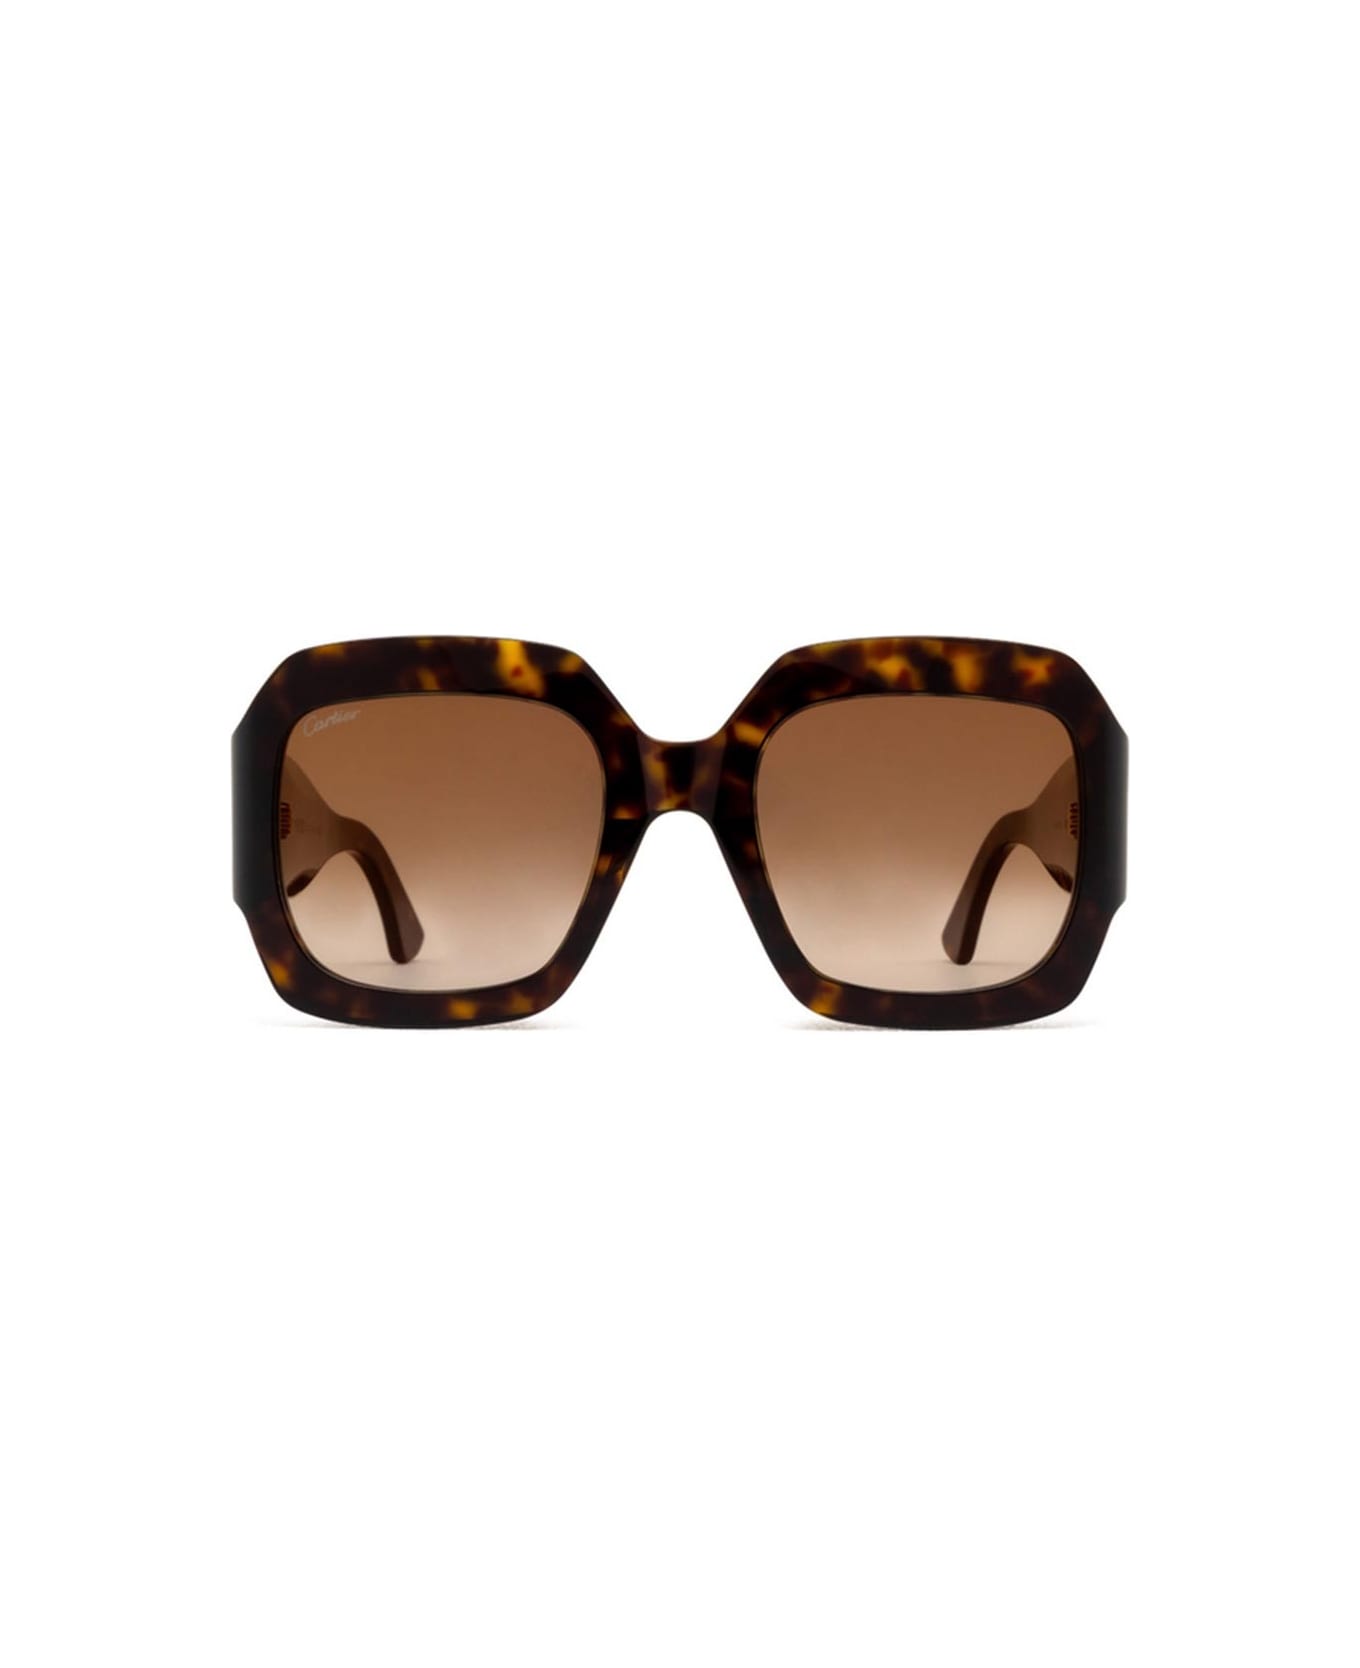 Cartier Eyewear Sunglasses - Havana/Marrone sfumato